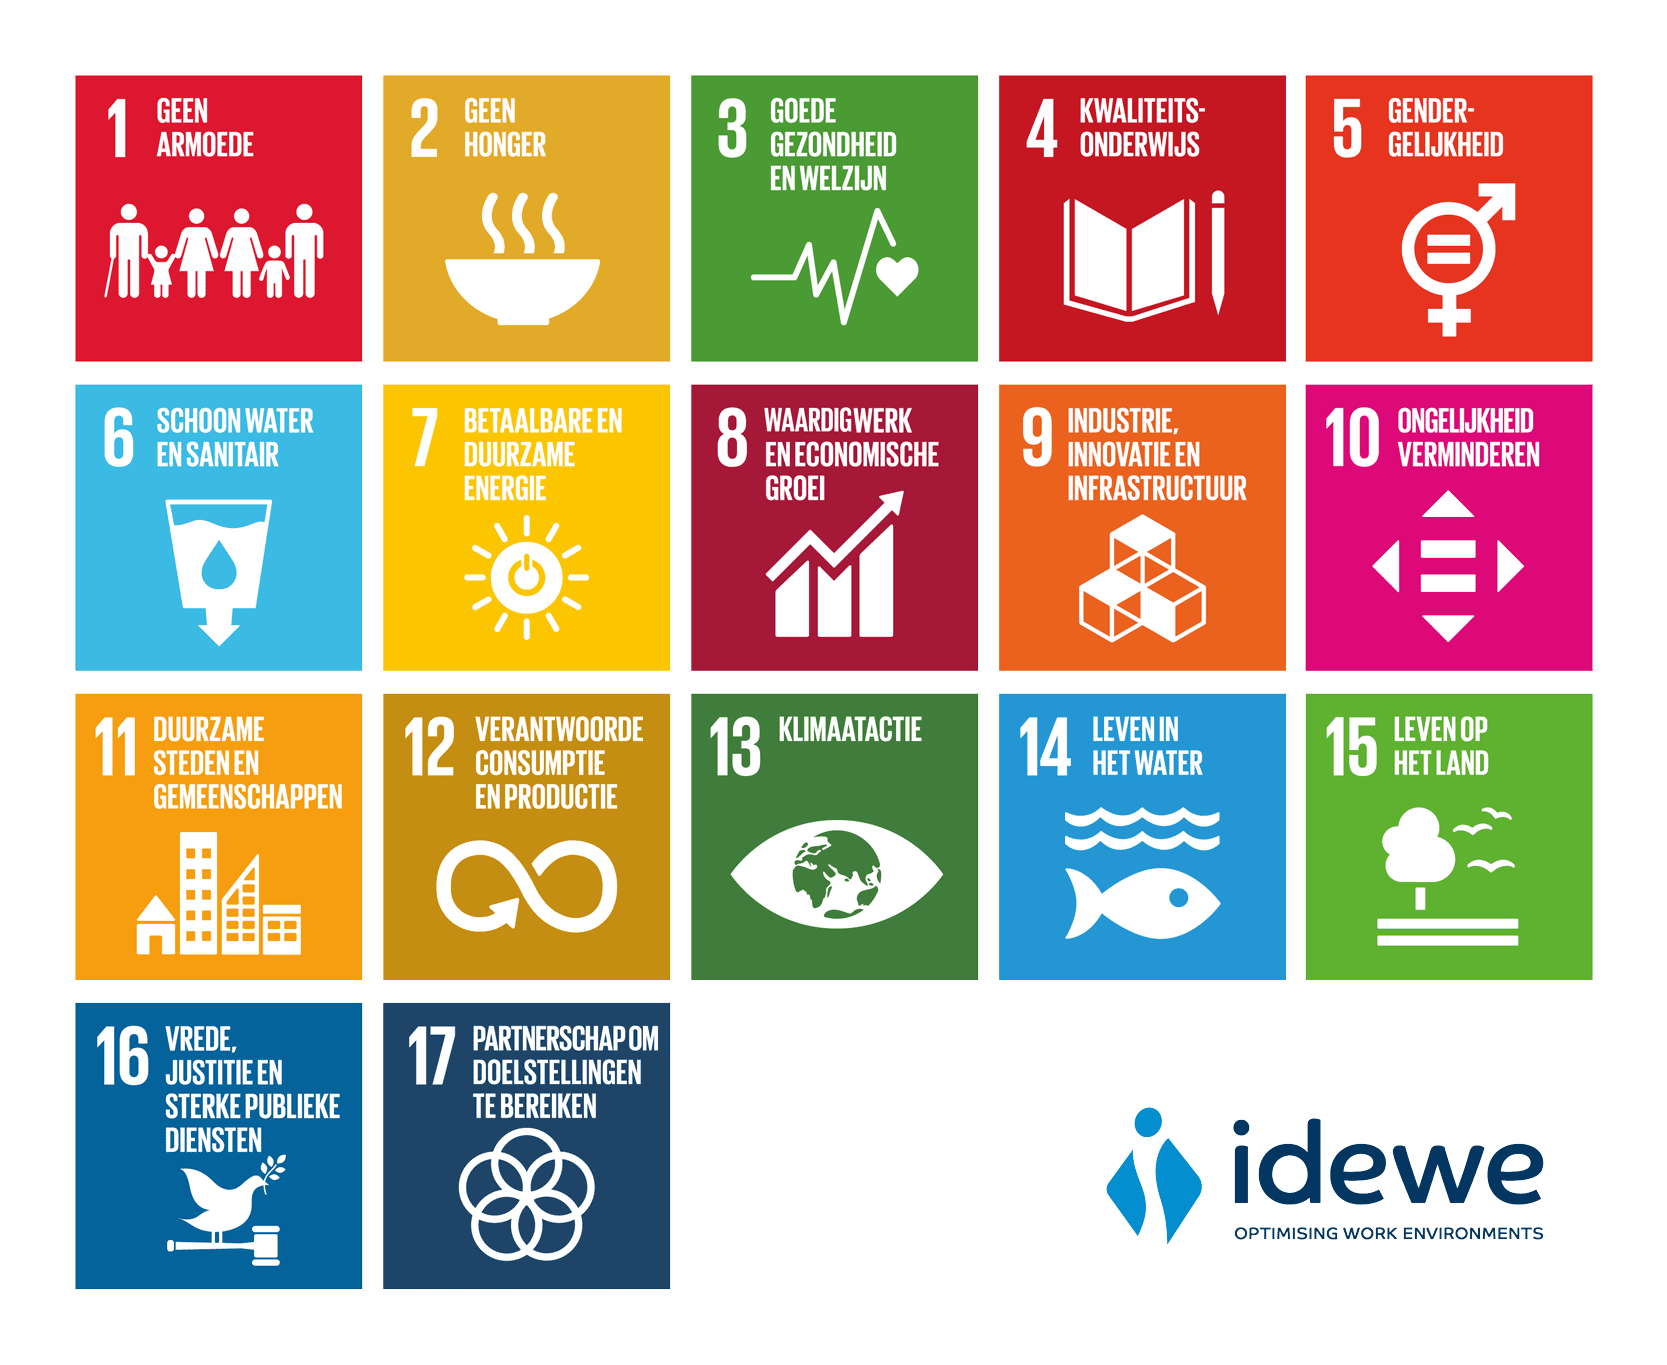 SDG IDEWE